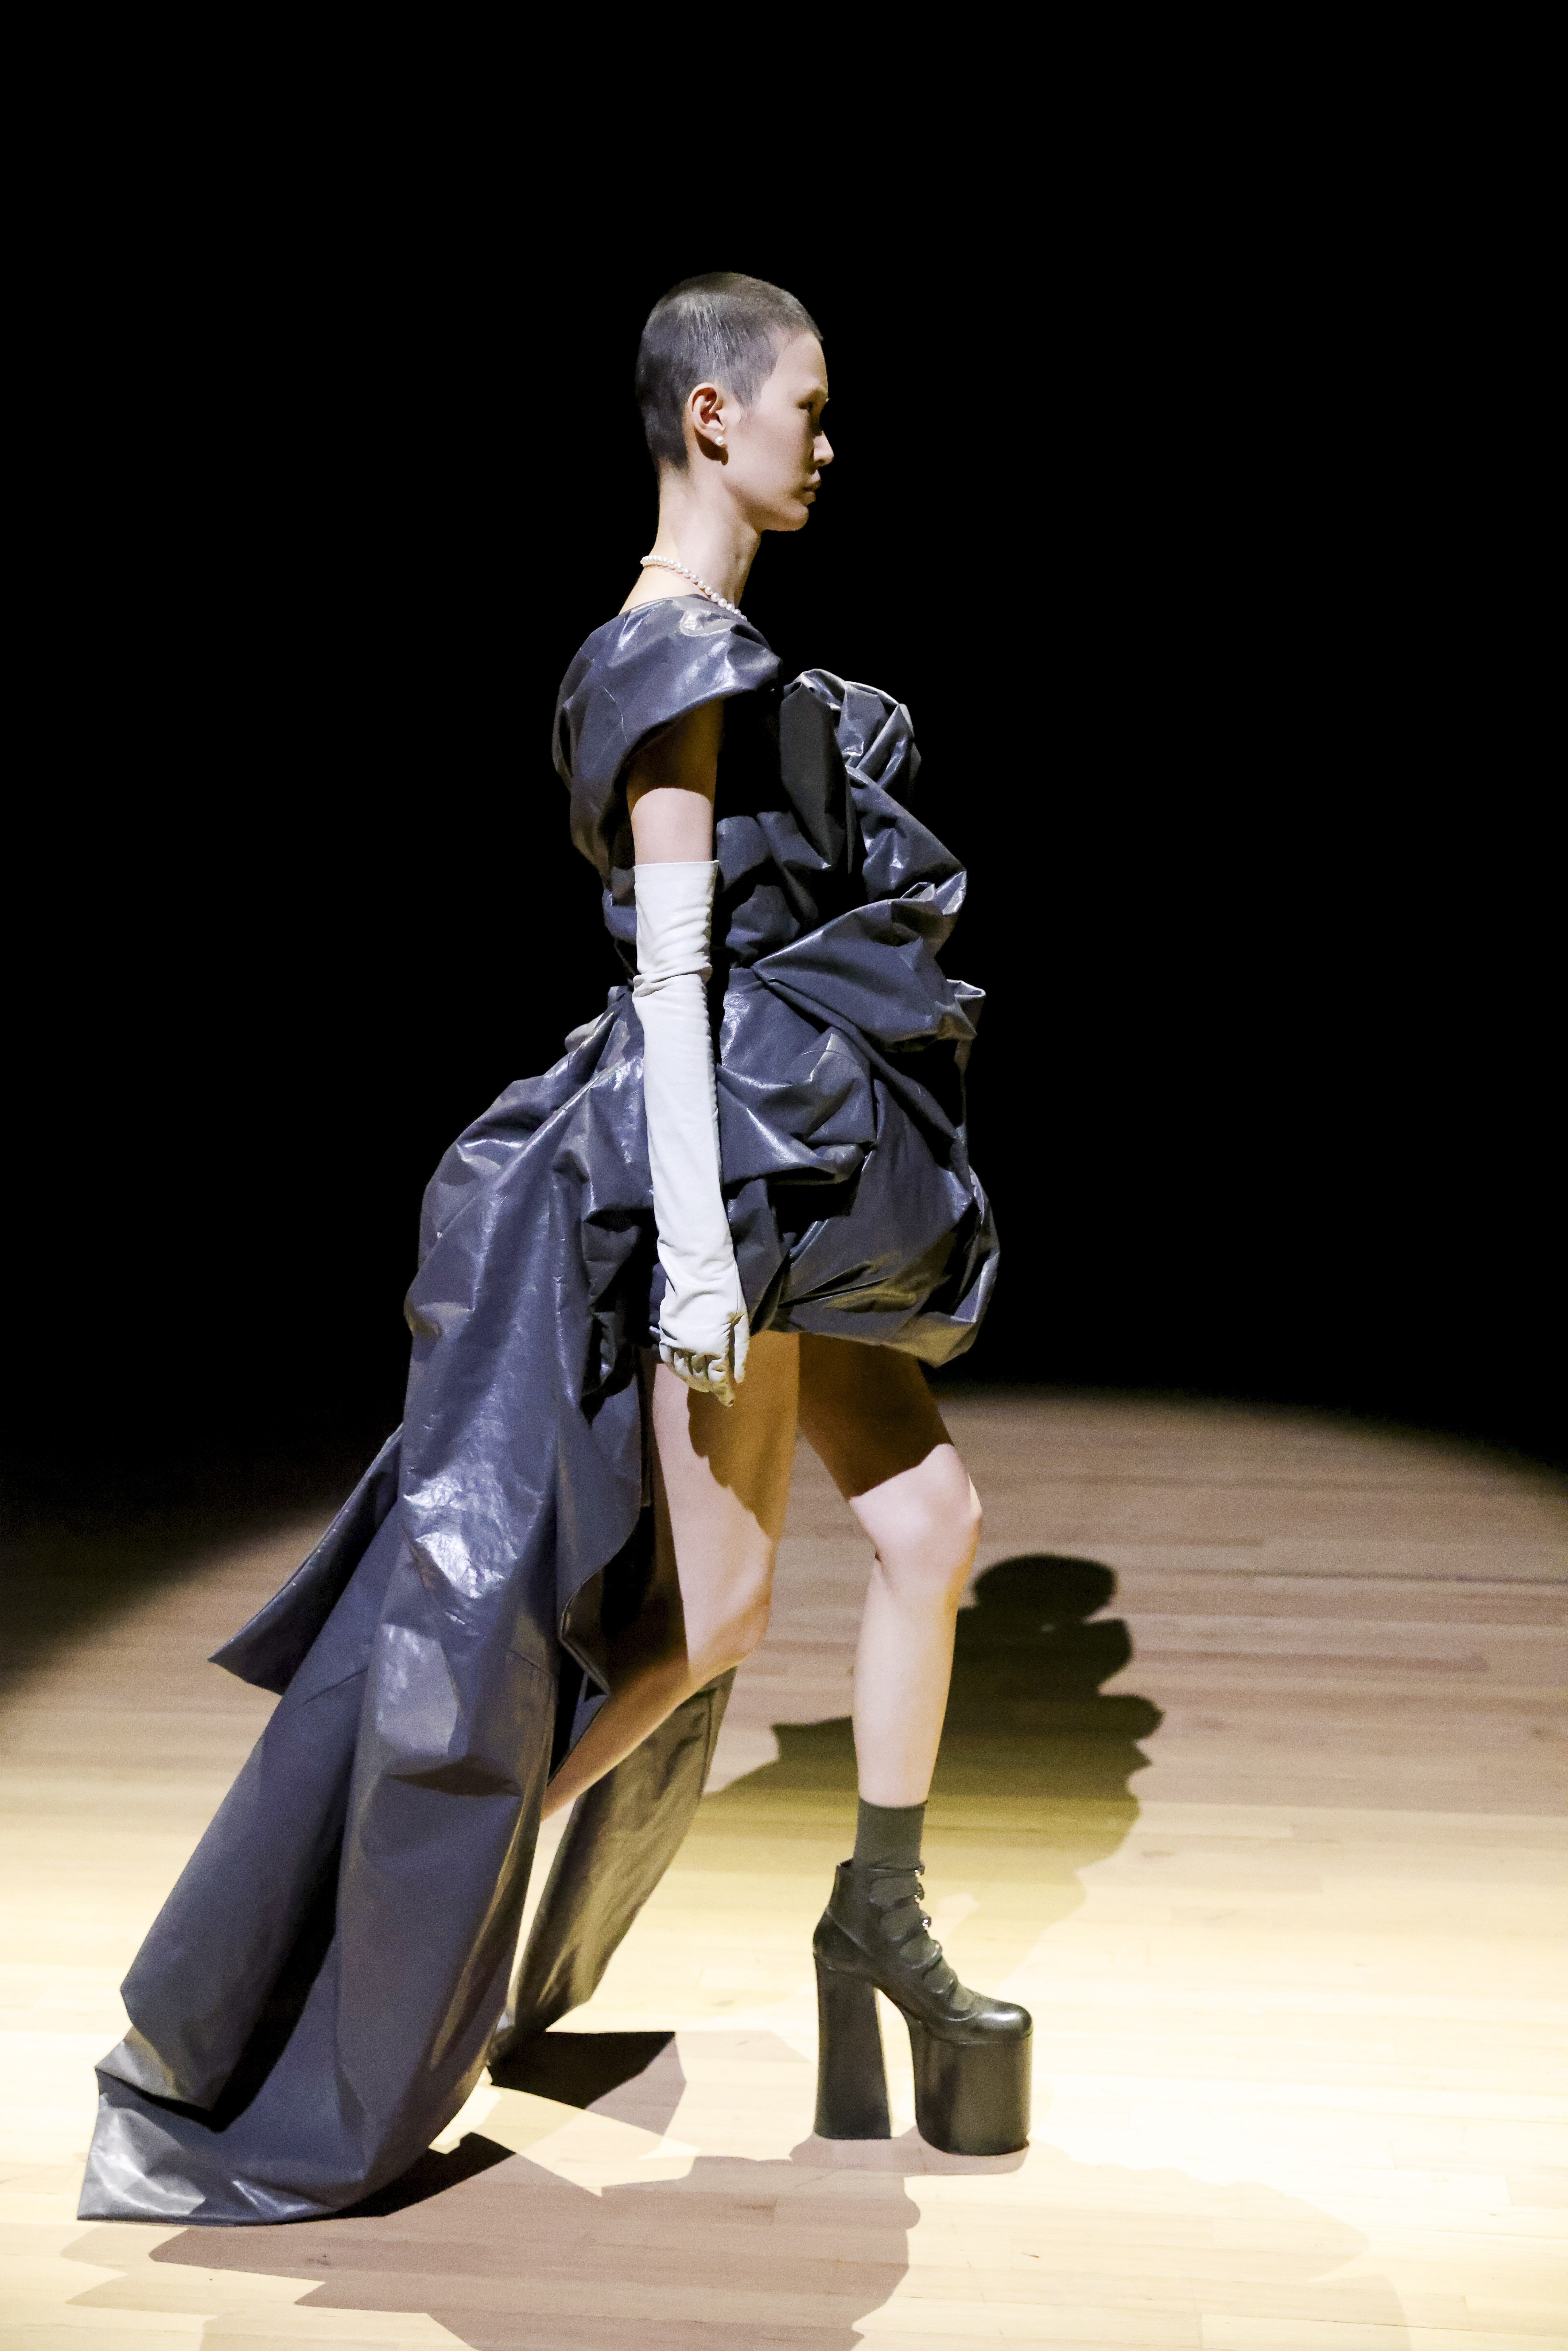 Marc Jacobs on Fashion's Future & Quarantine Creativity